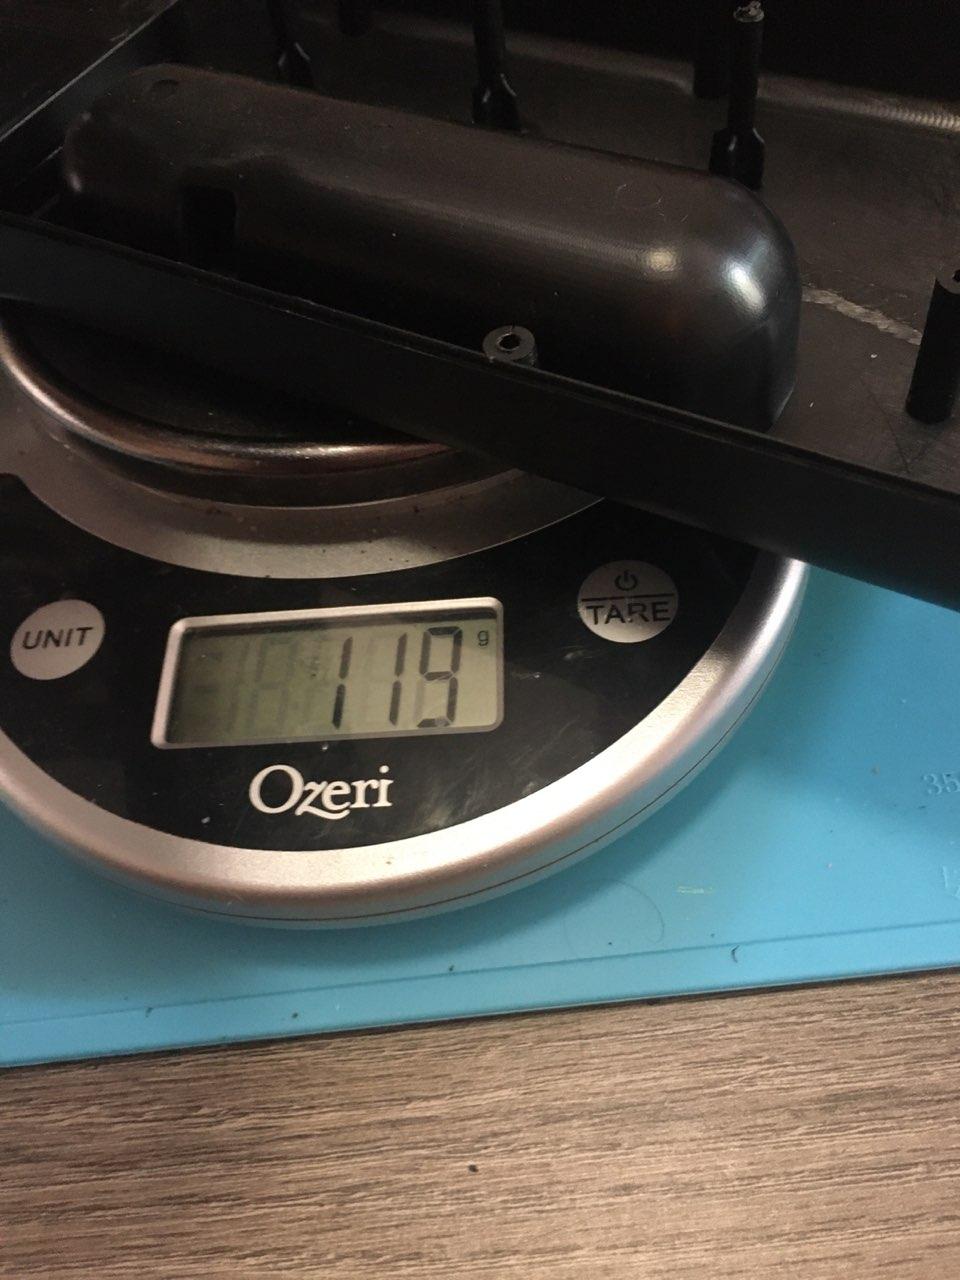 Weight of keyboard bottom, 119 grams